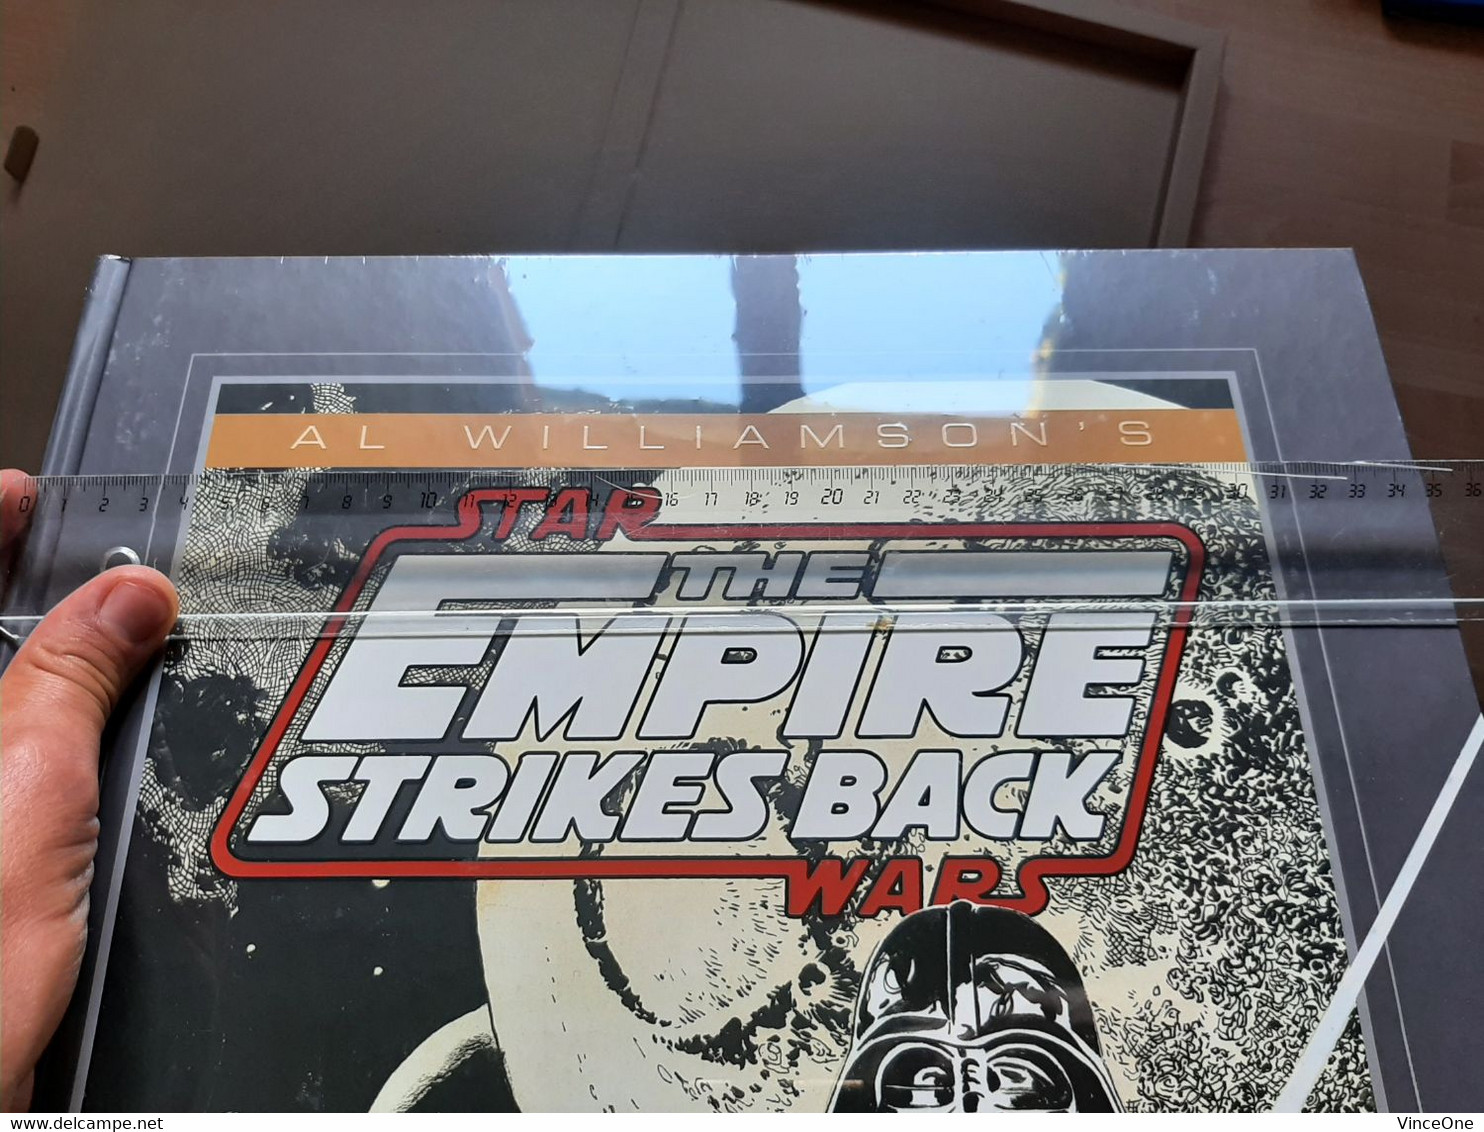 Star Wars - Artist's Edition "The Empire Strikes Back" AL WILLIAMSON - Format Géant - Otros Editores